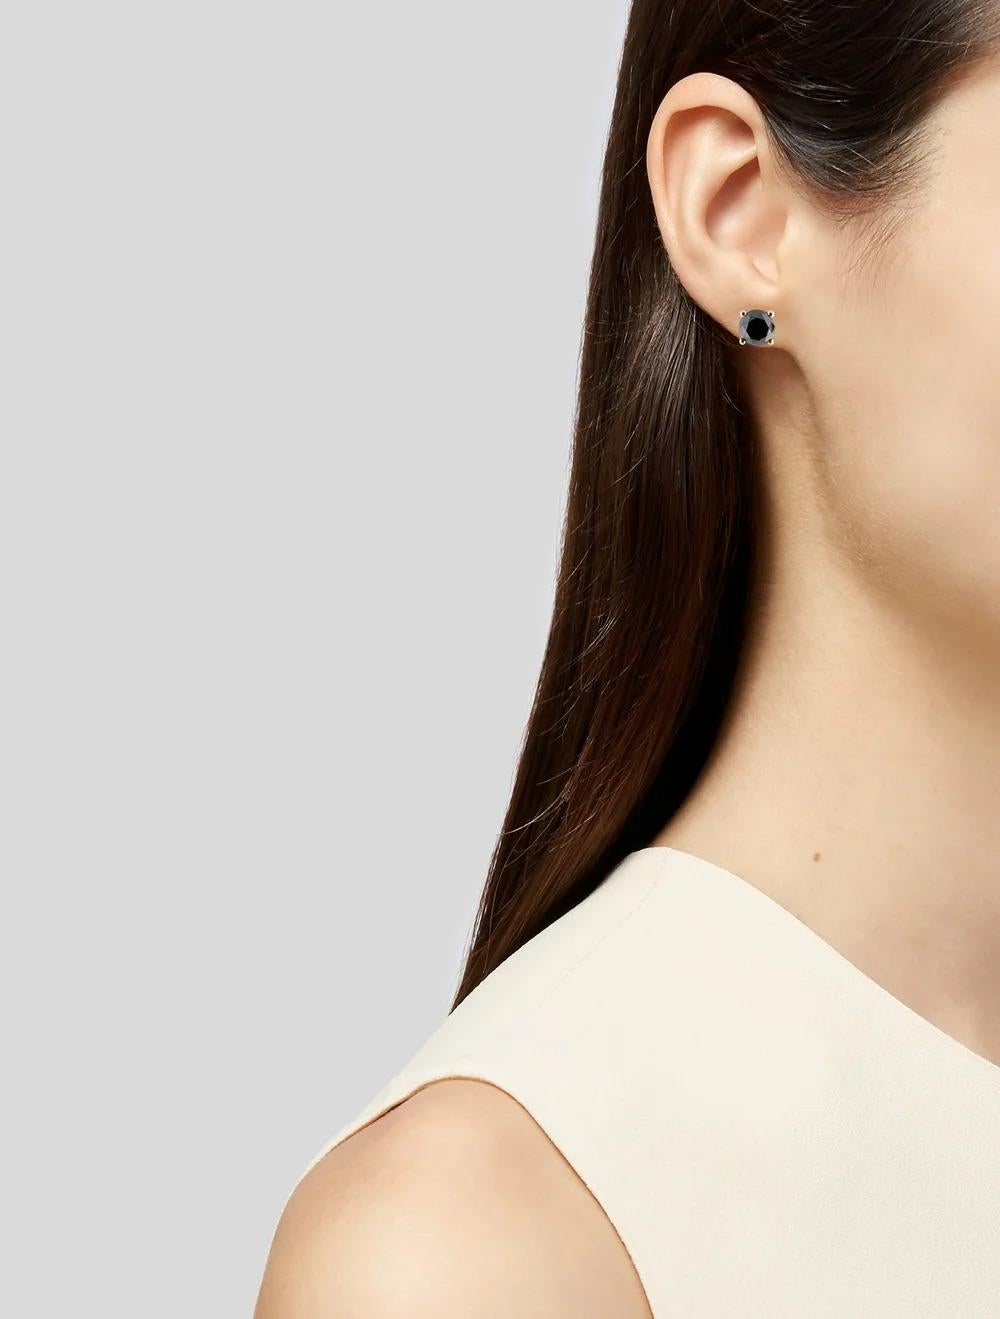 Round Cut 14K Gold 4.74ctw Diamond Stud Earrings - Round Brilliant Cut - Timeless Elegance For Sale